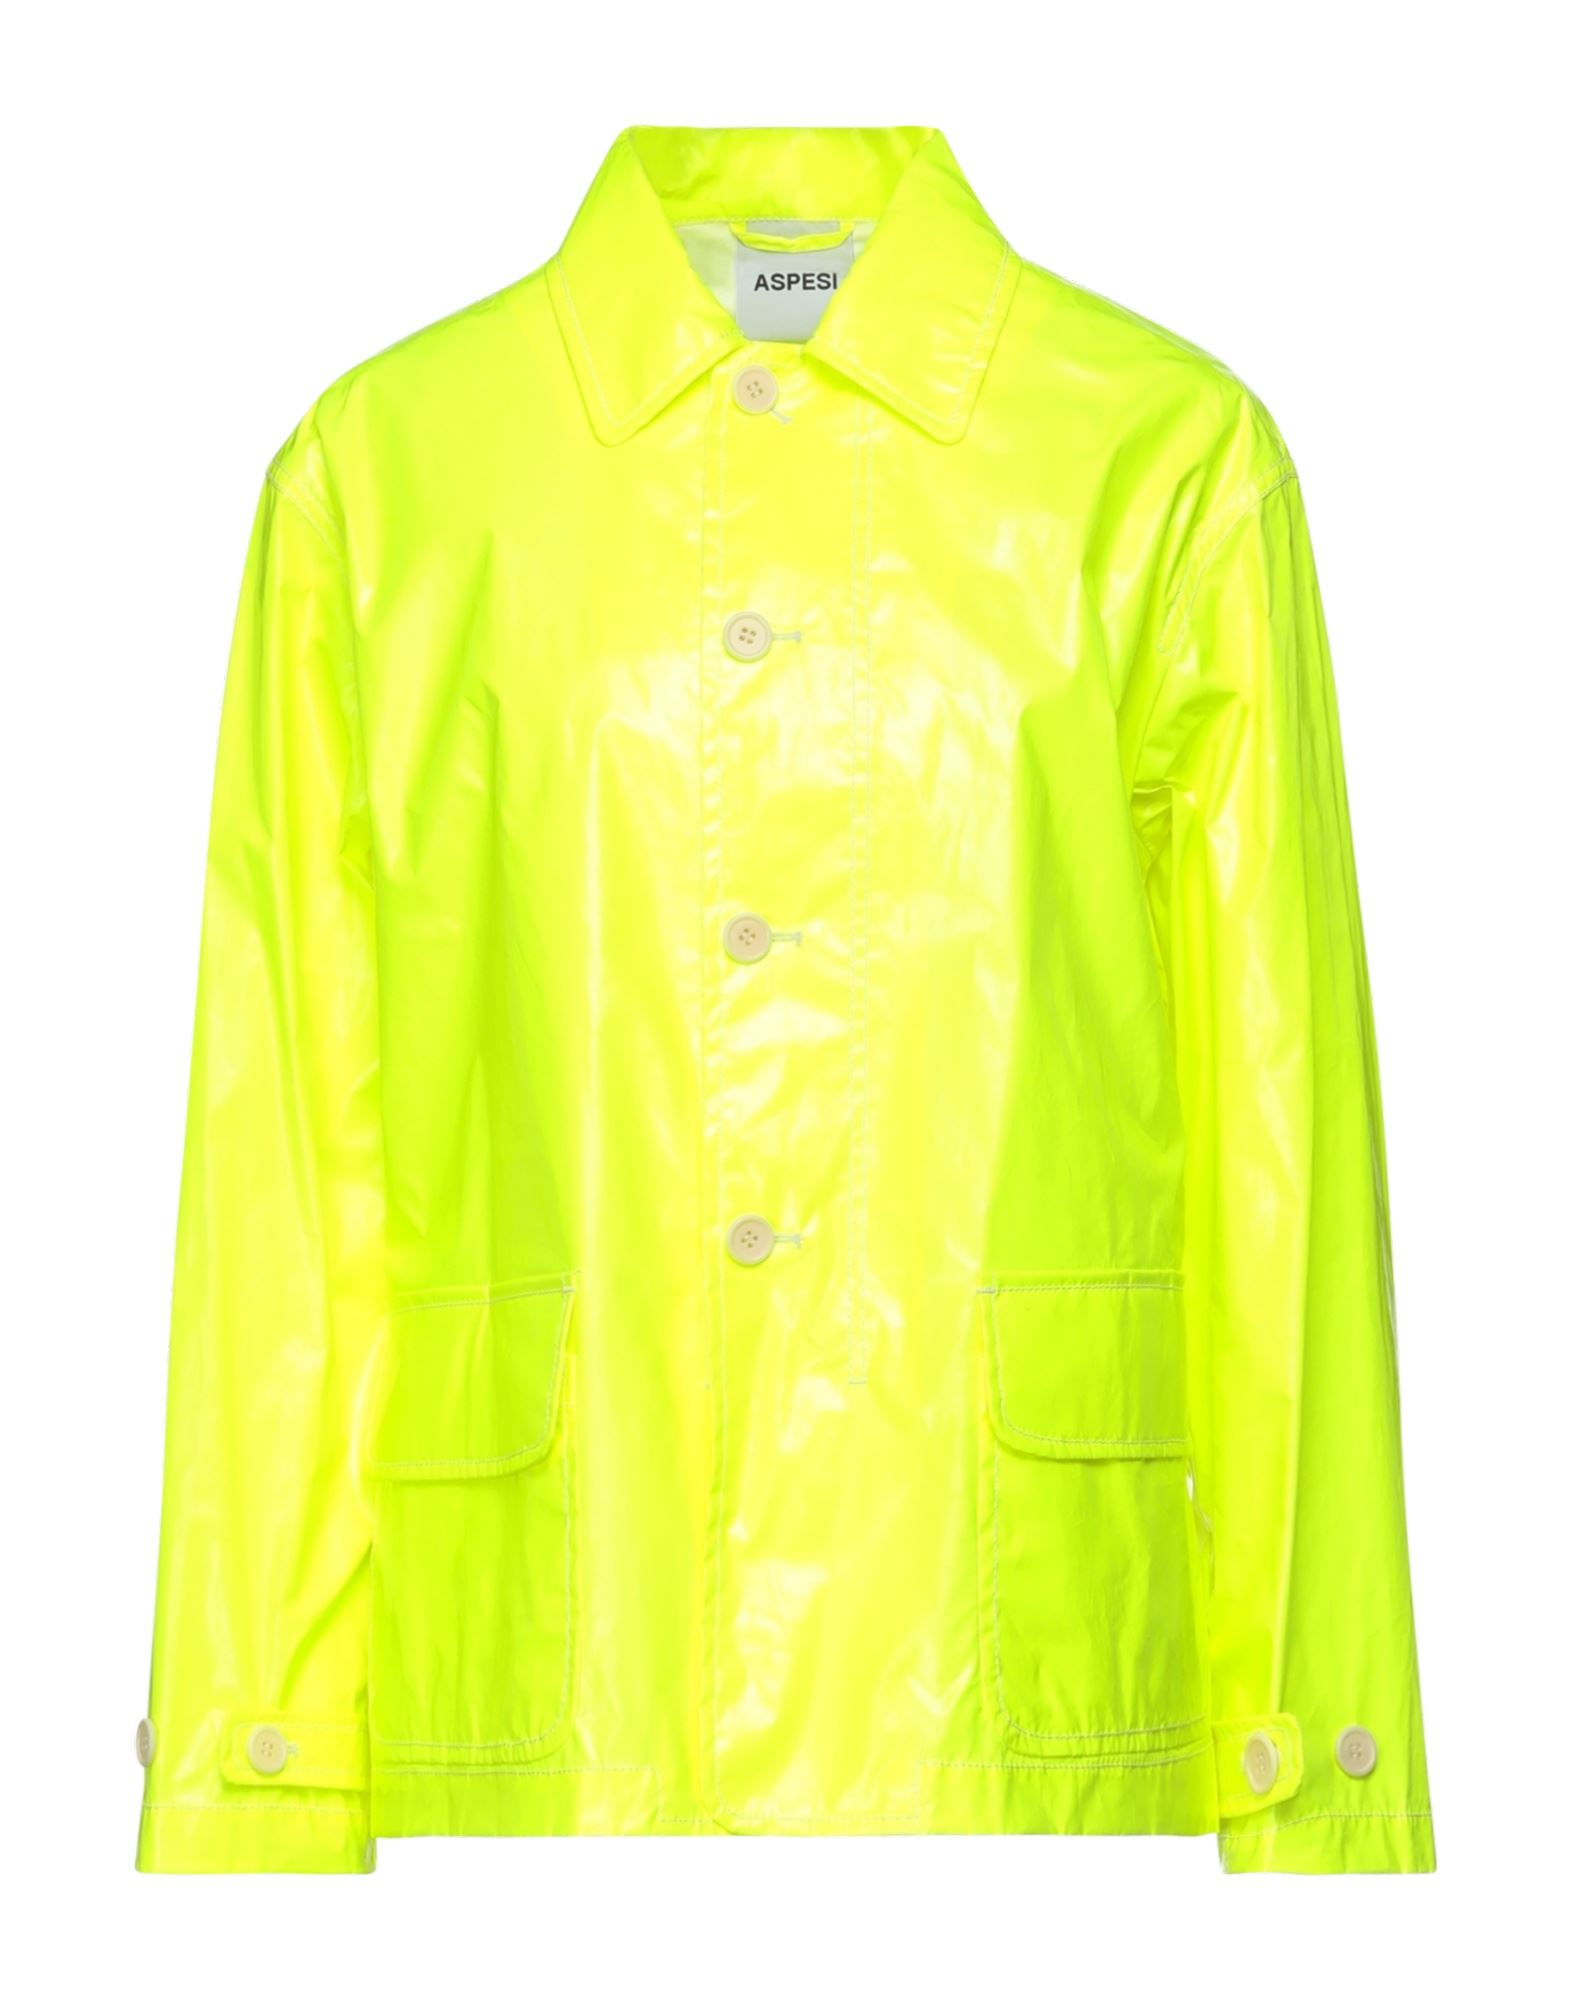 Aspesi Jackets In Yellow